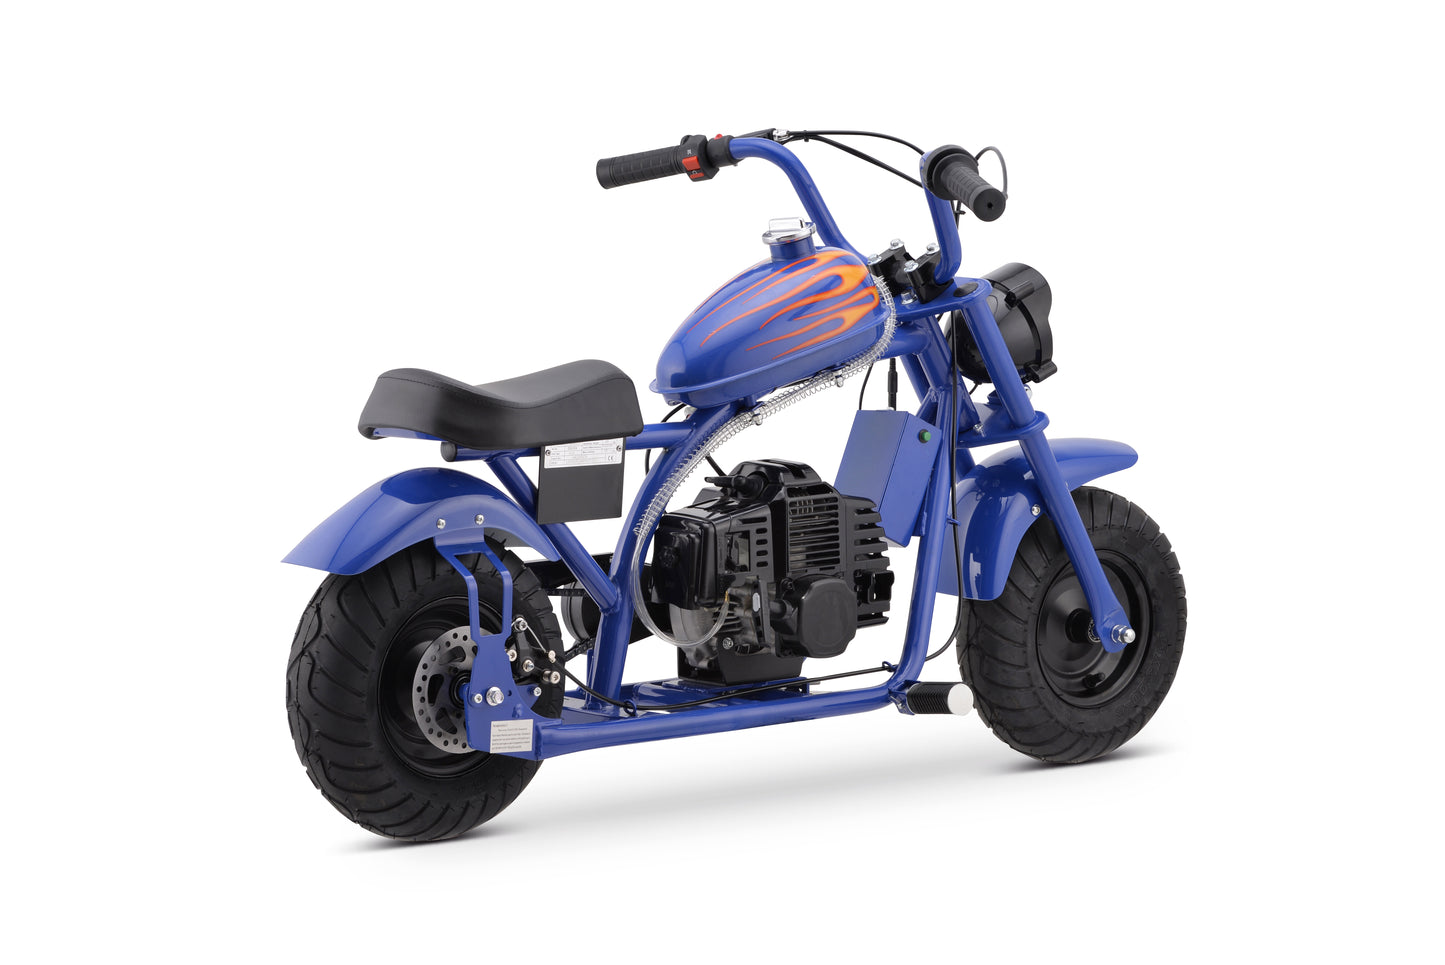 BLUE GBMOTO Mini Chopper Style kid Bike, 49.4 CC 2-Stroke Dirt Bike with Big Headlight, Premium Tire, Metal Frame, Disc Brakes, Max Load 165Lbs, Up to 20Mph, EPA Approved